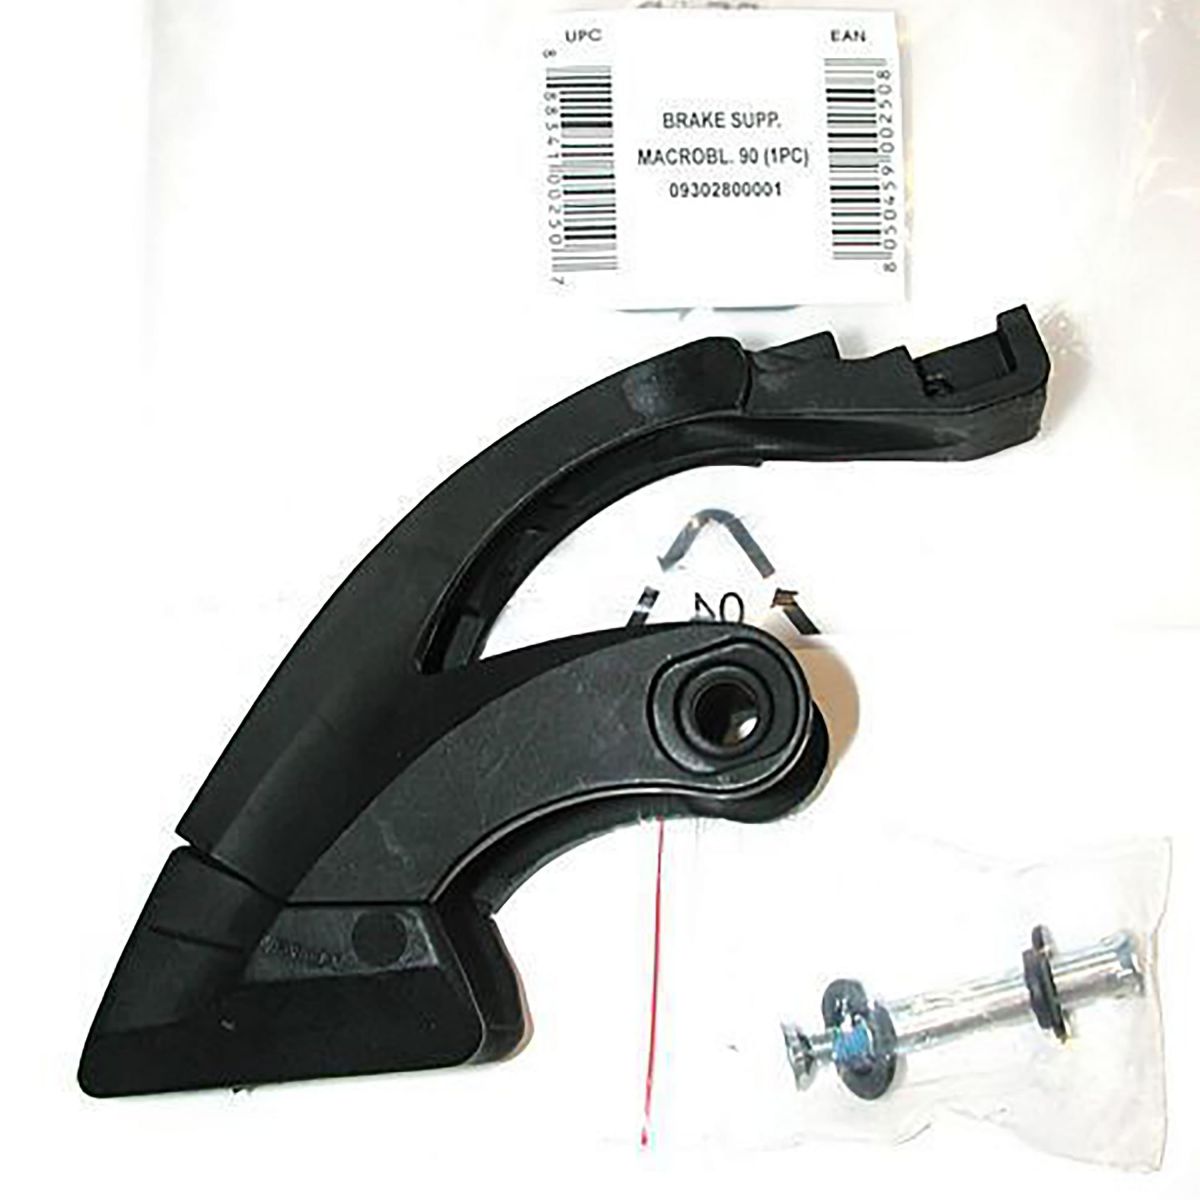 rollerblade-brake-support-macroblade-90